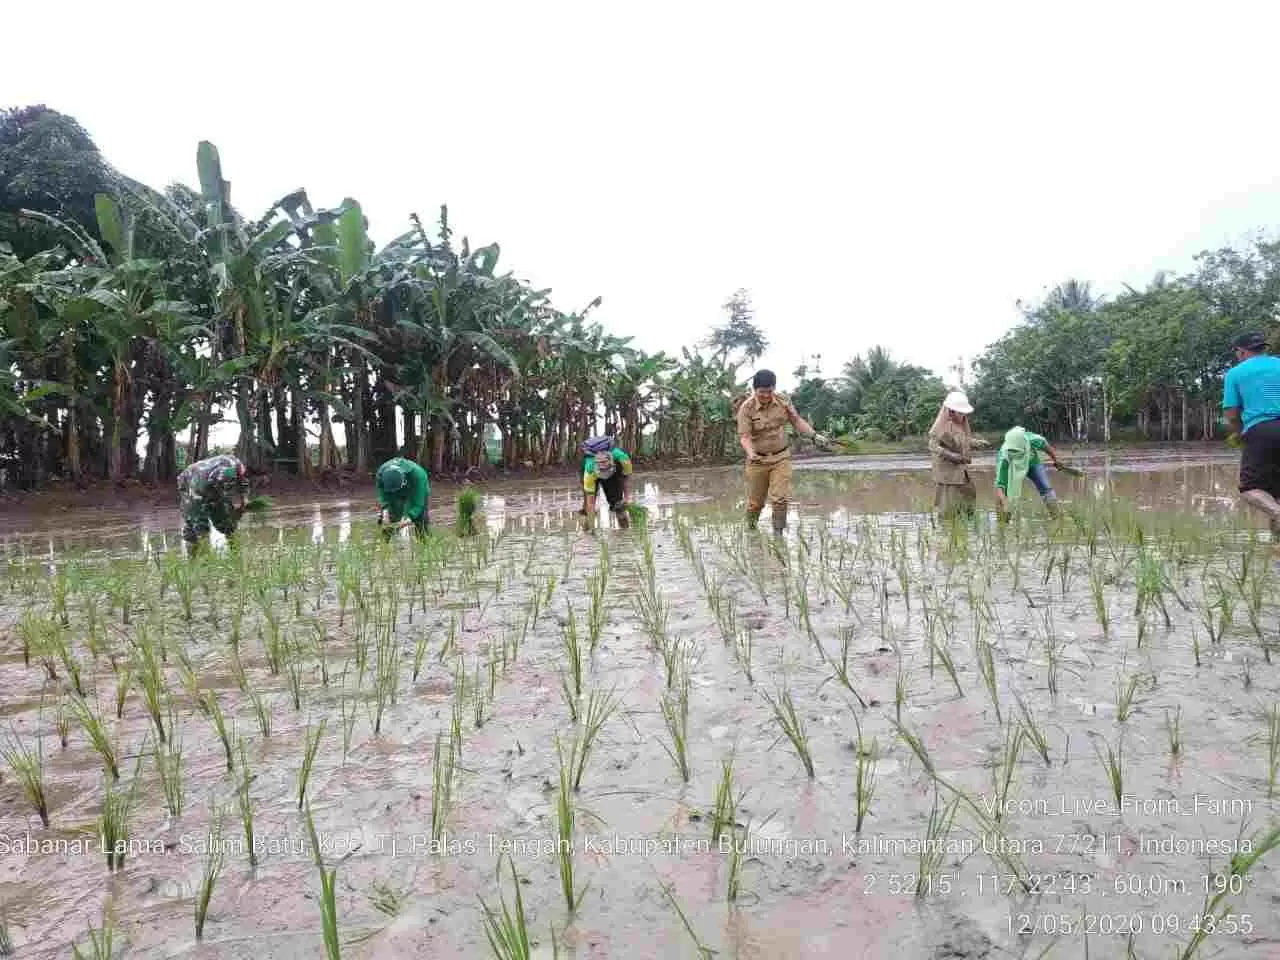 KETAHANAN PANGAN: Kegiatan penanaman bibit padi yang menjadi simbolis dimulai gerakan percepatan panen tanam padi dan jagung di Kaltara, Selasa (12/5).